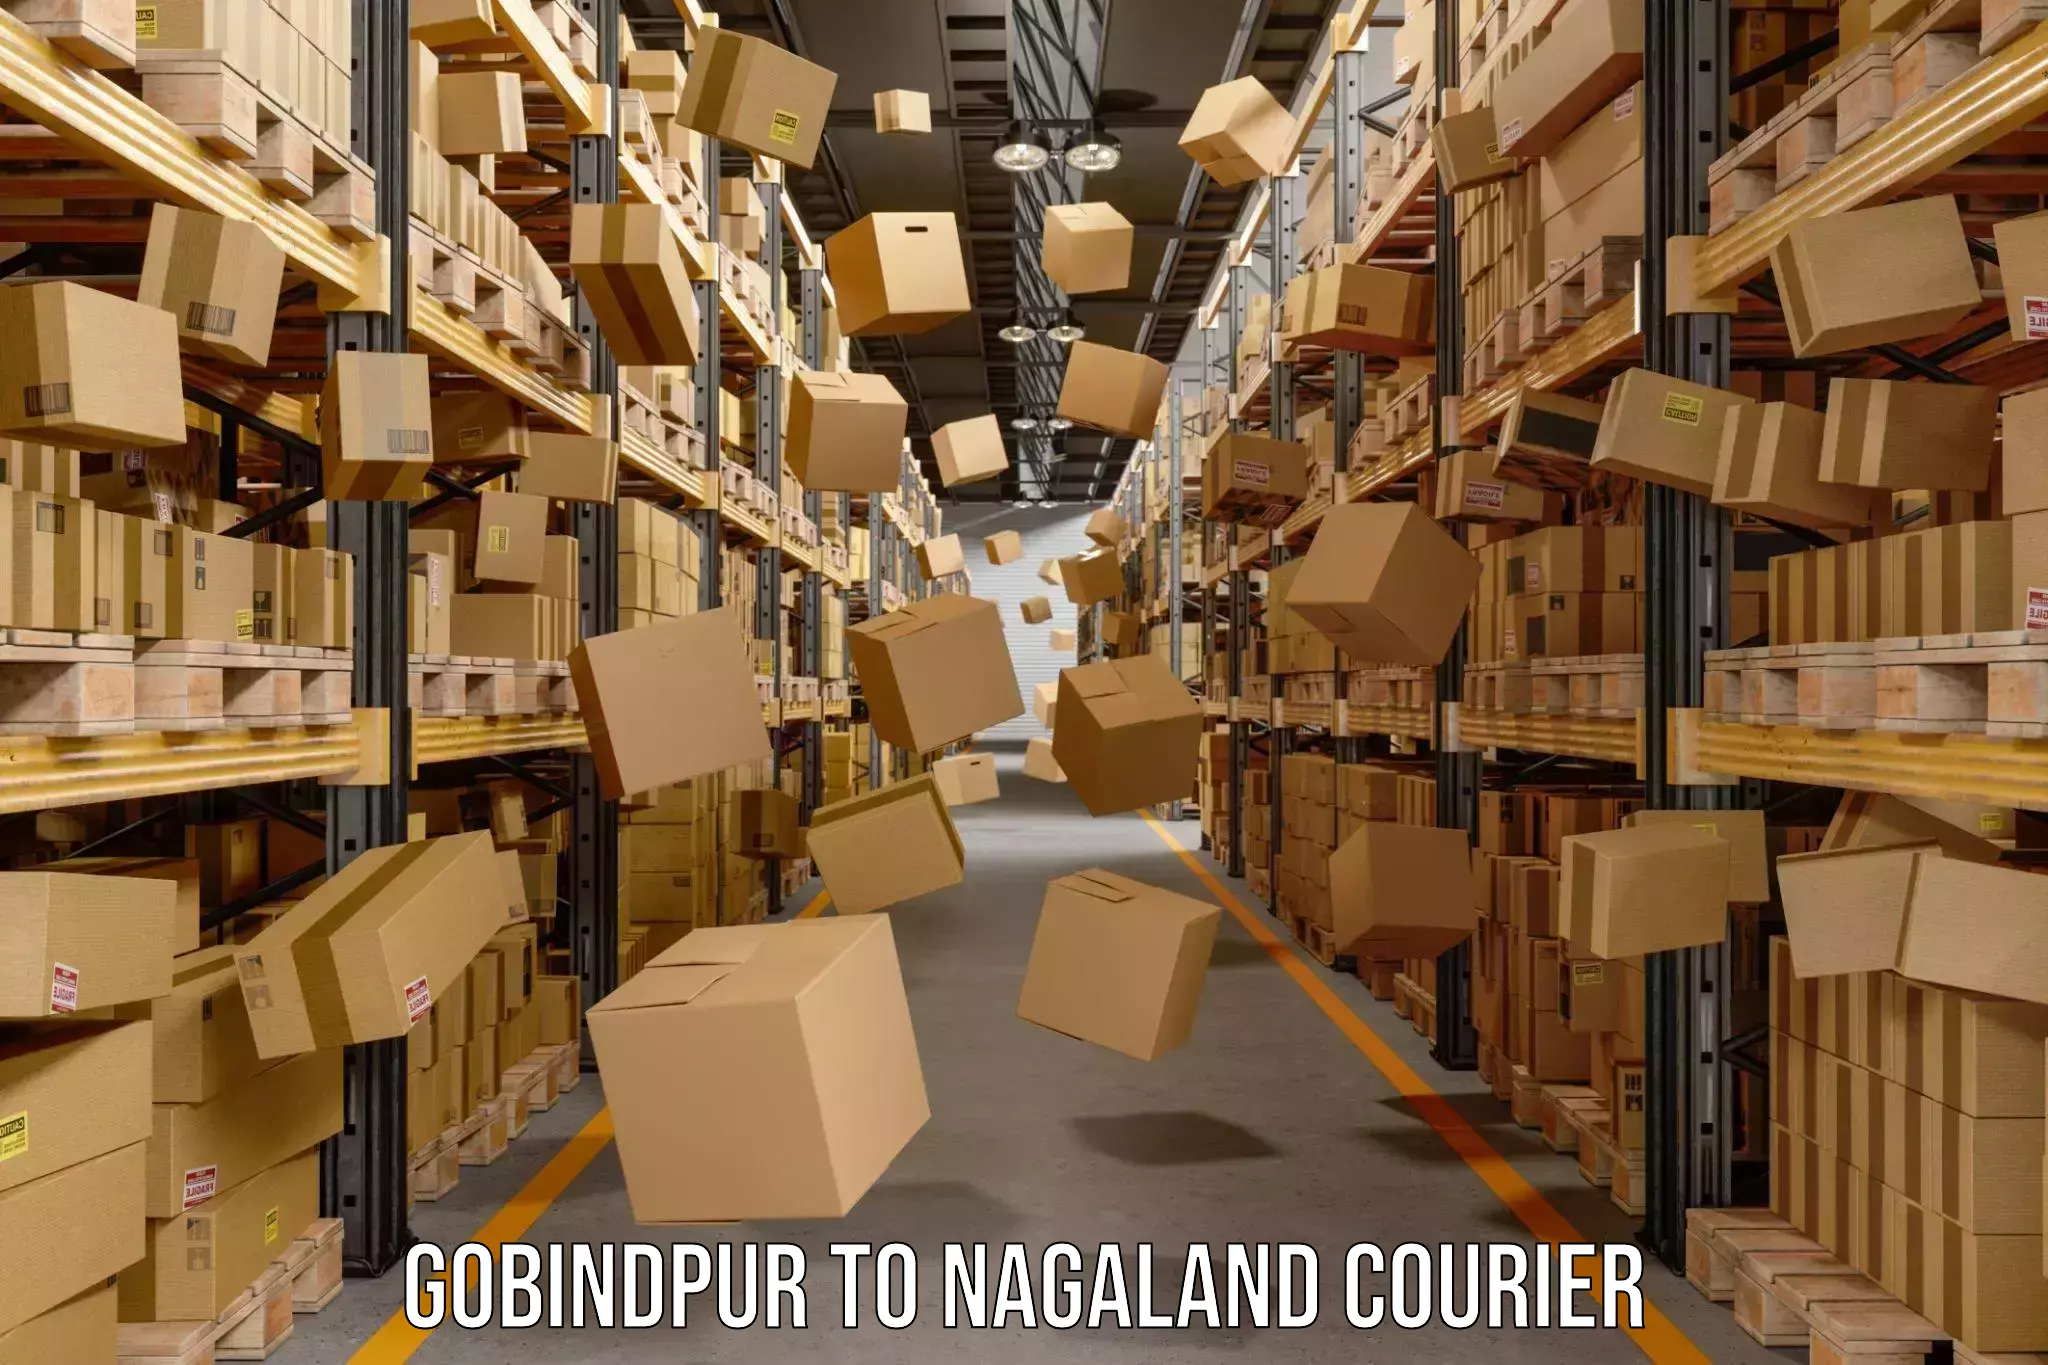 International courier networks Gobindpur to Kohima